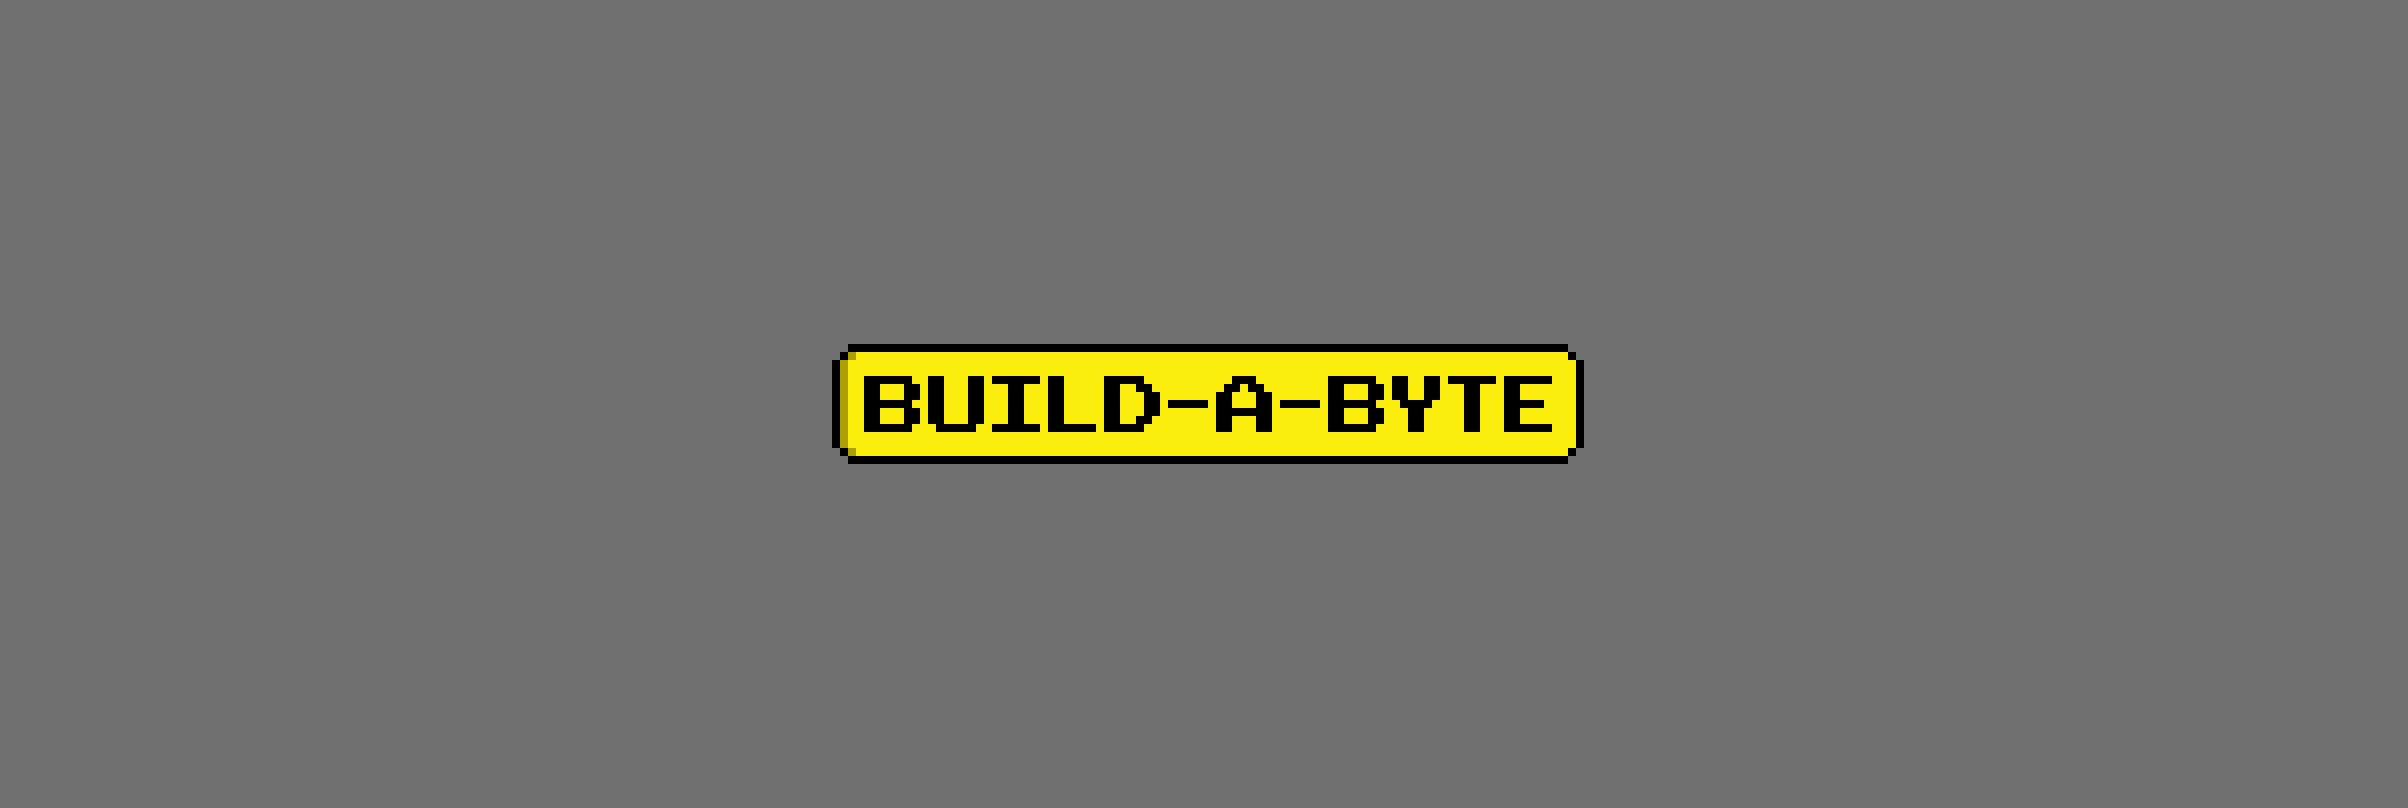 Build-A-Byte 橫幅